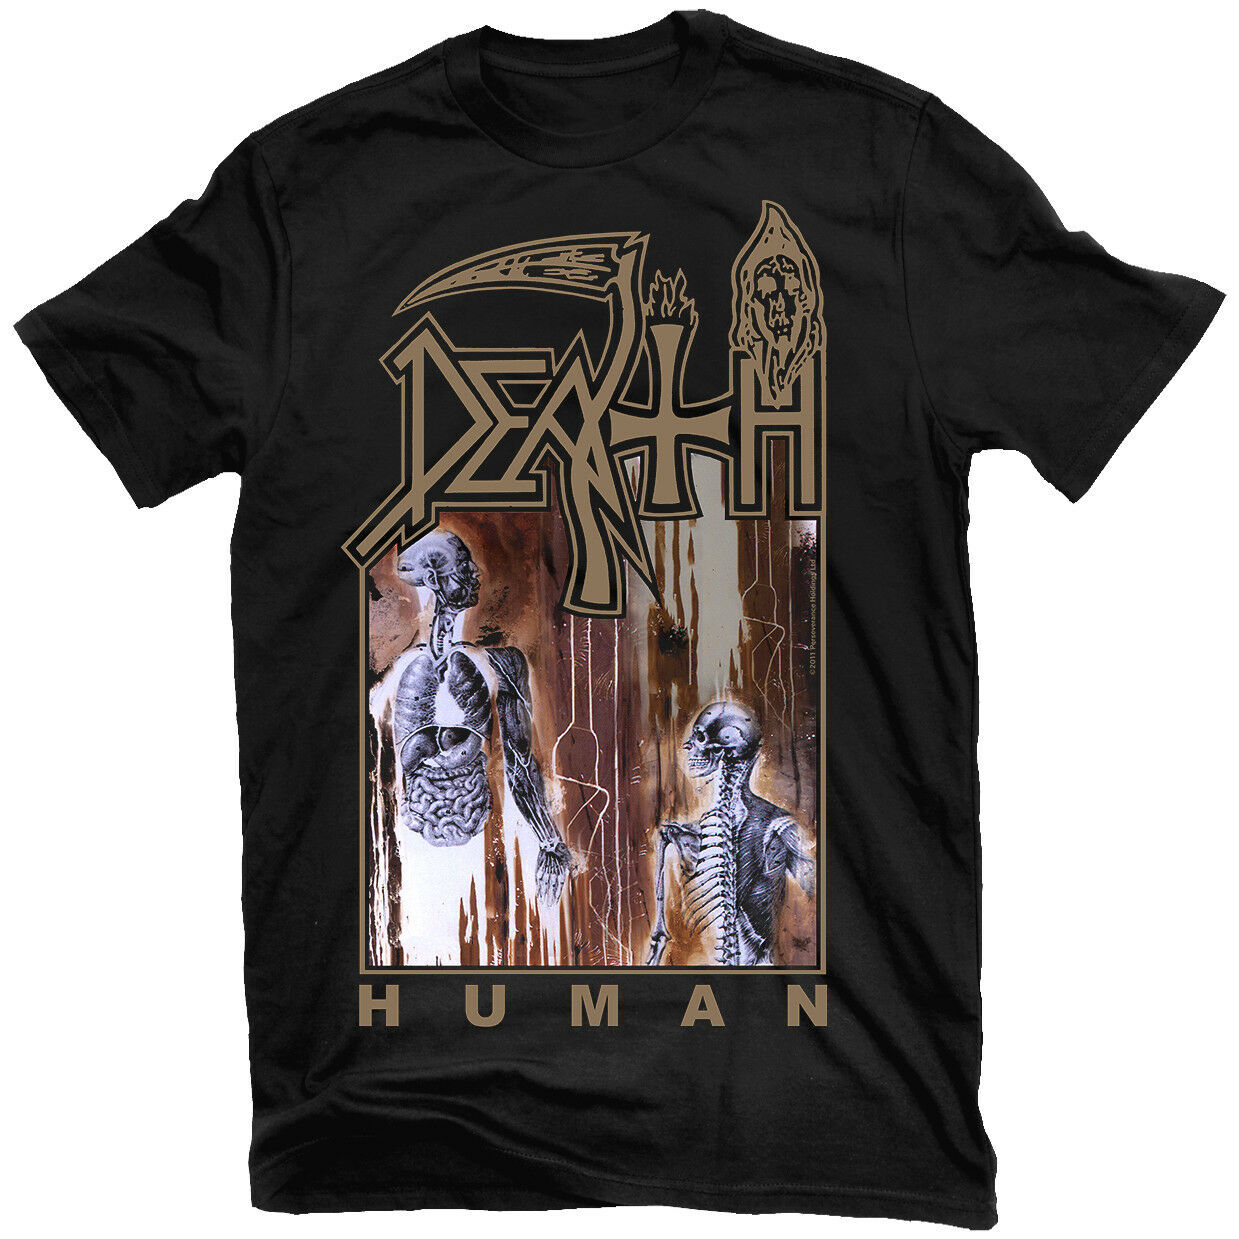 Human death. Death Human футболка. Death Band футболка. Майка Death Human.